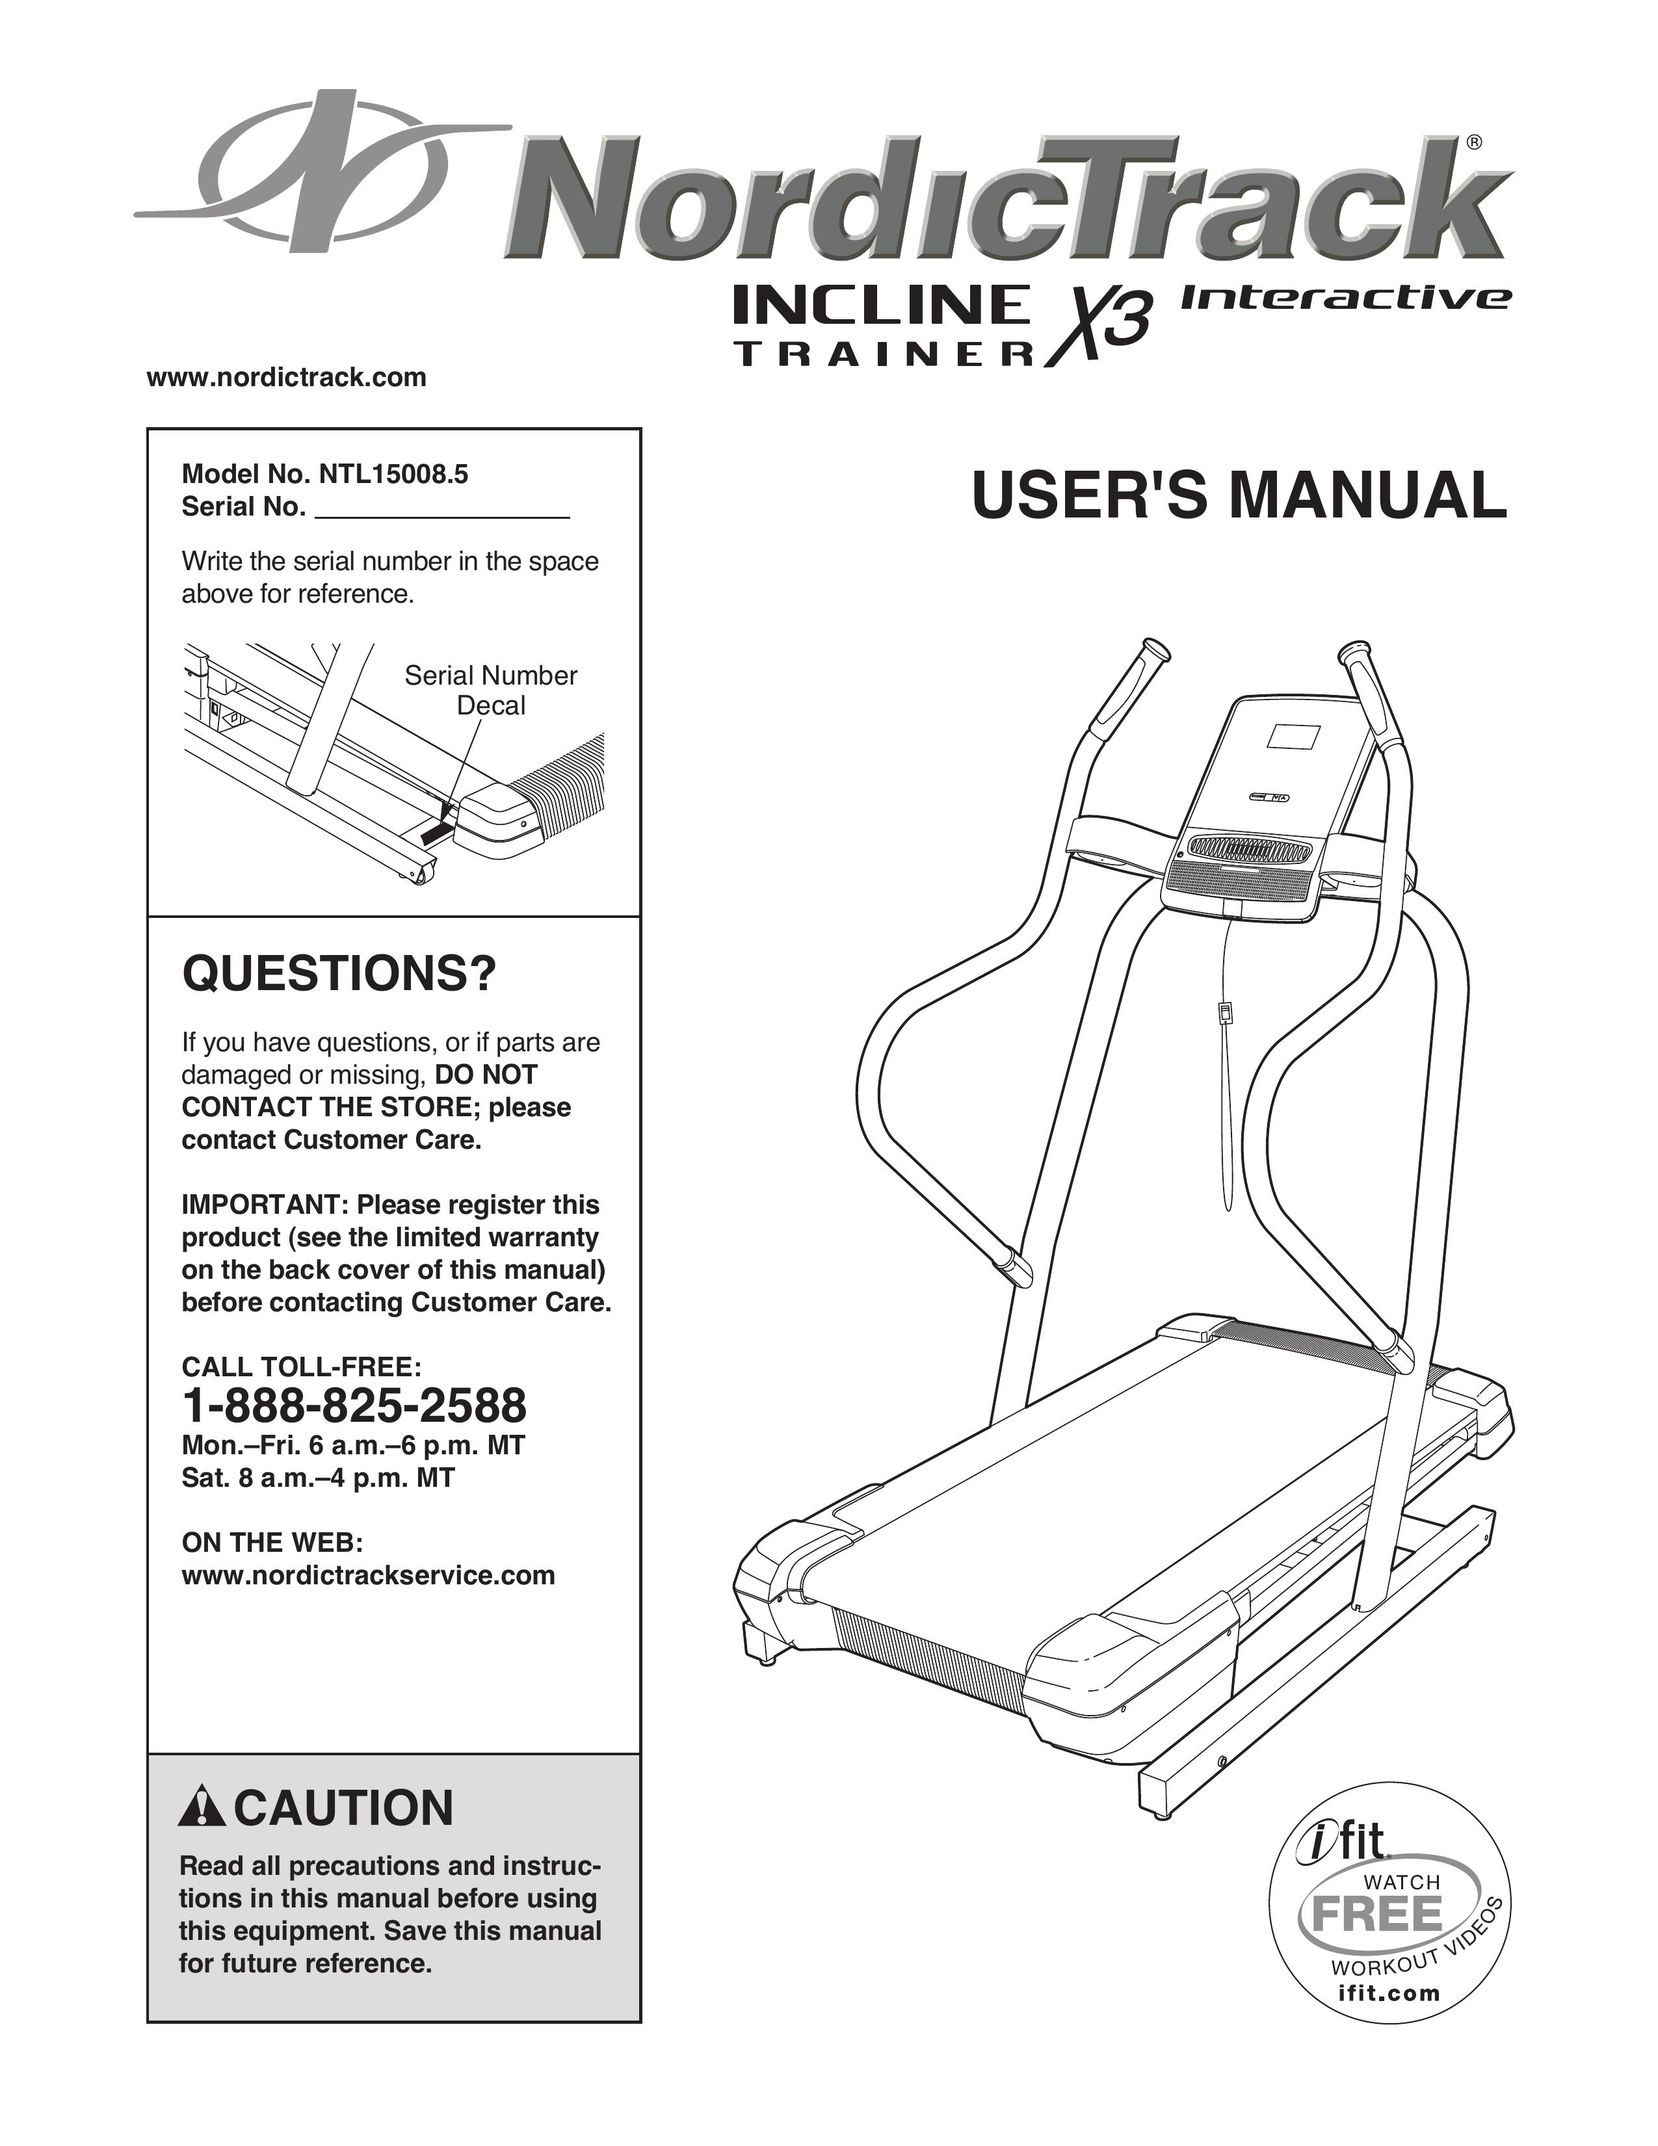 NordicTrack NTL15008.5 Fitness Electronics User Manual